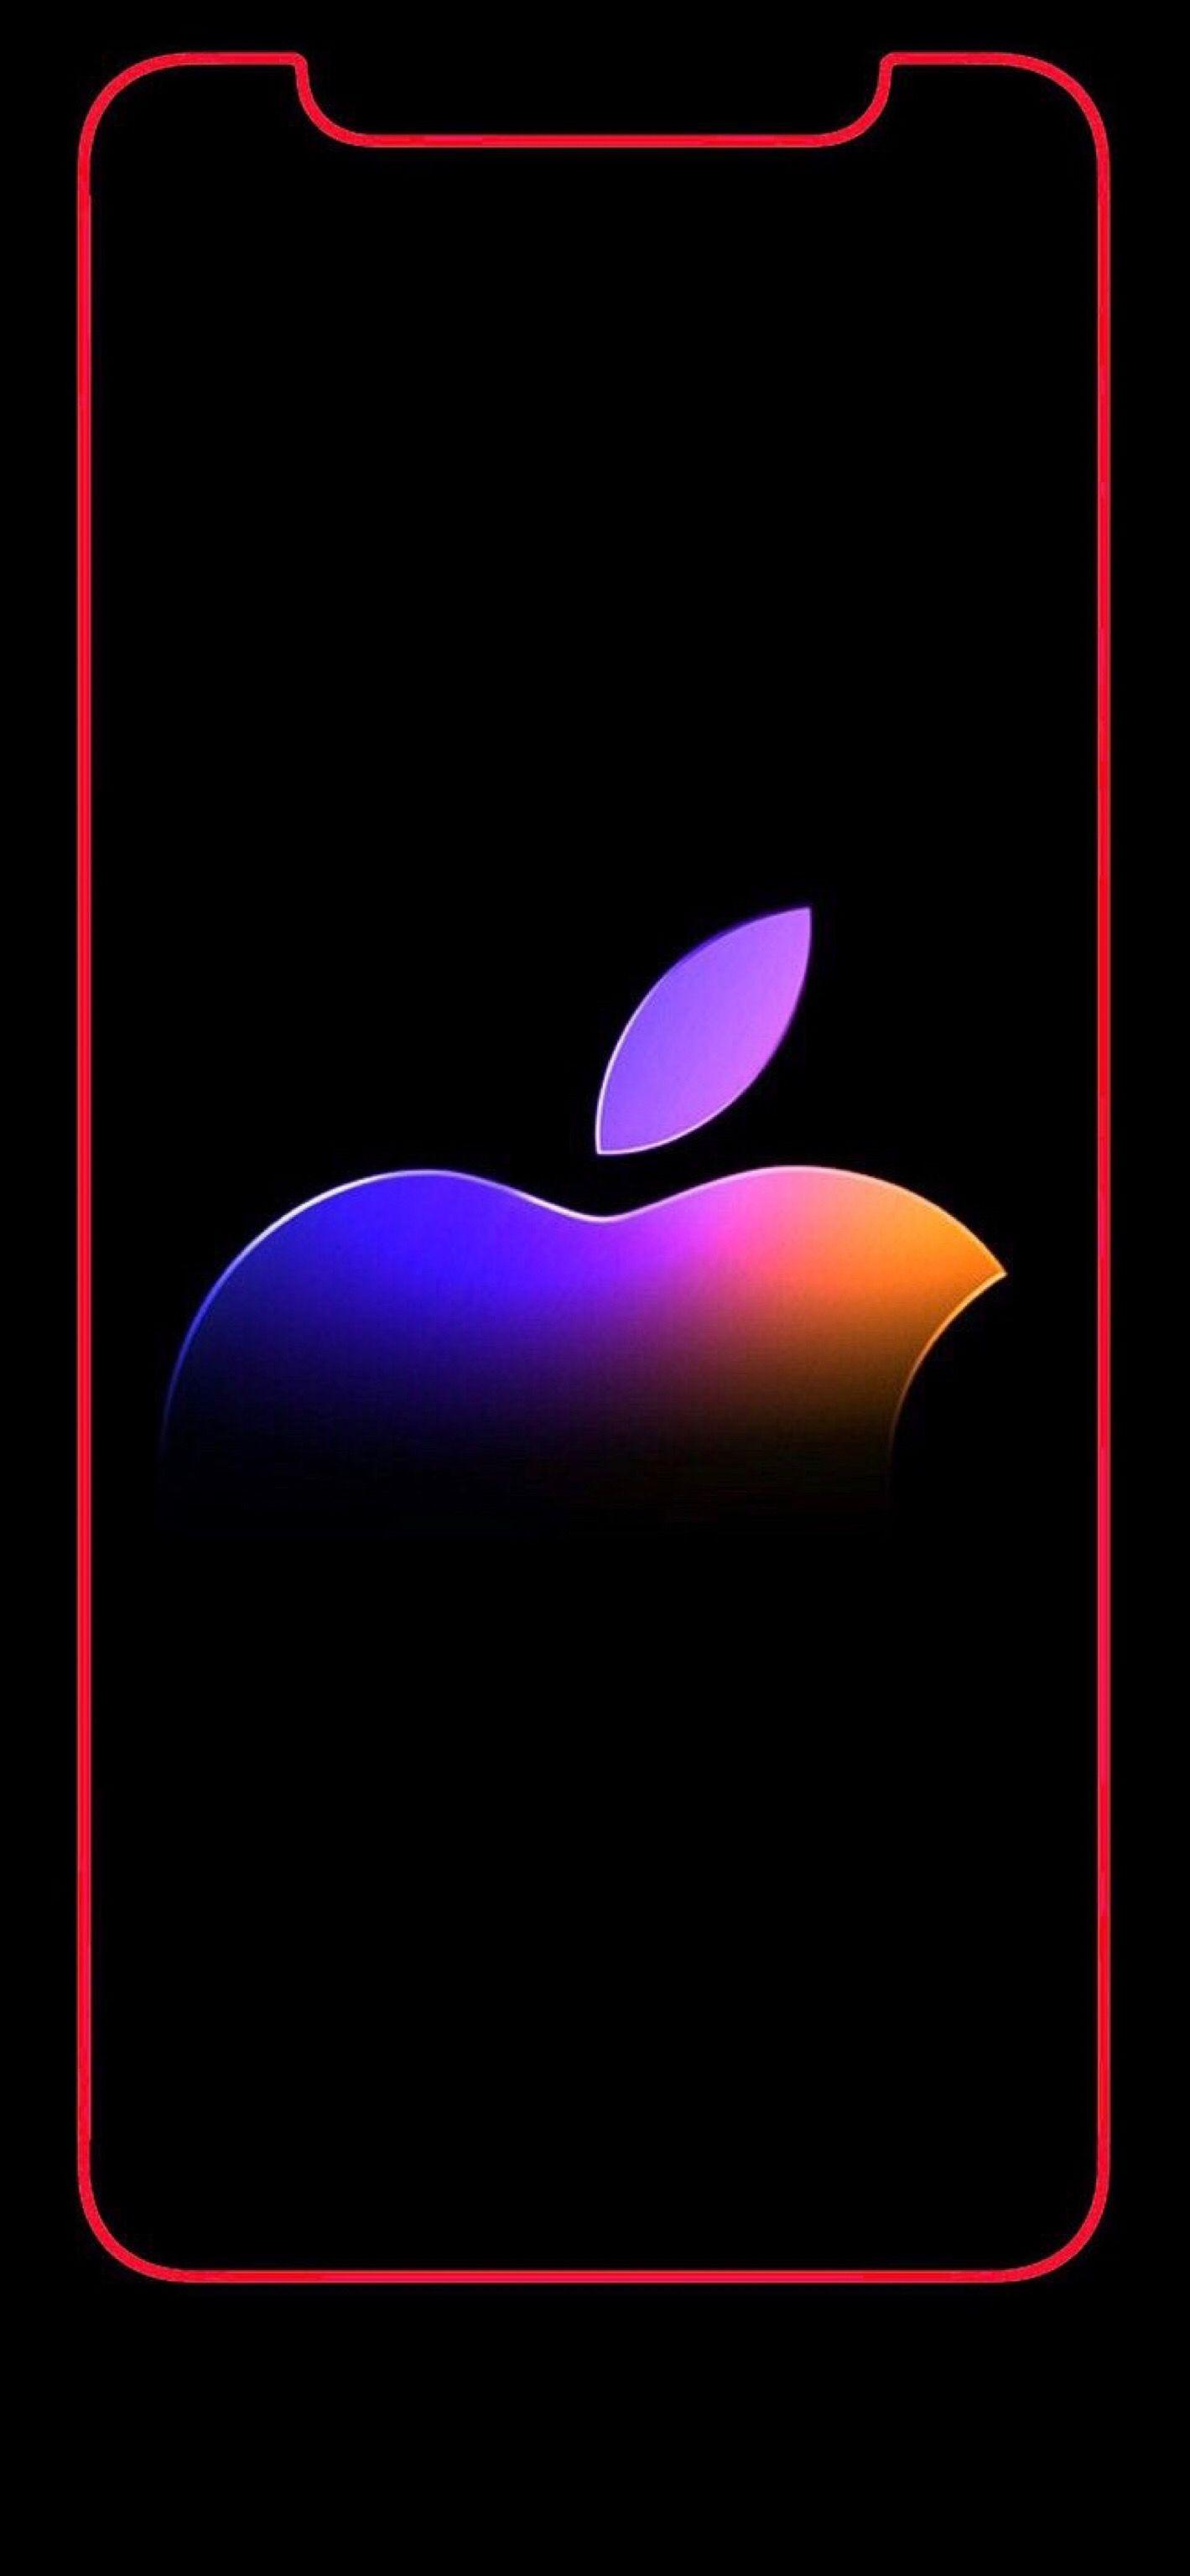 Wallpaper iPhone X logo rainbow 4. Apple iphone wallpaper